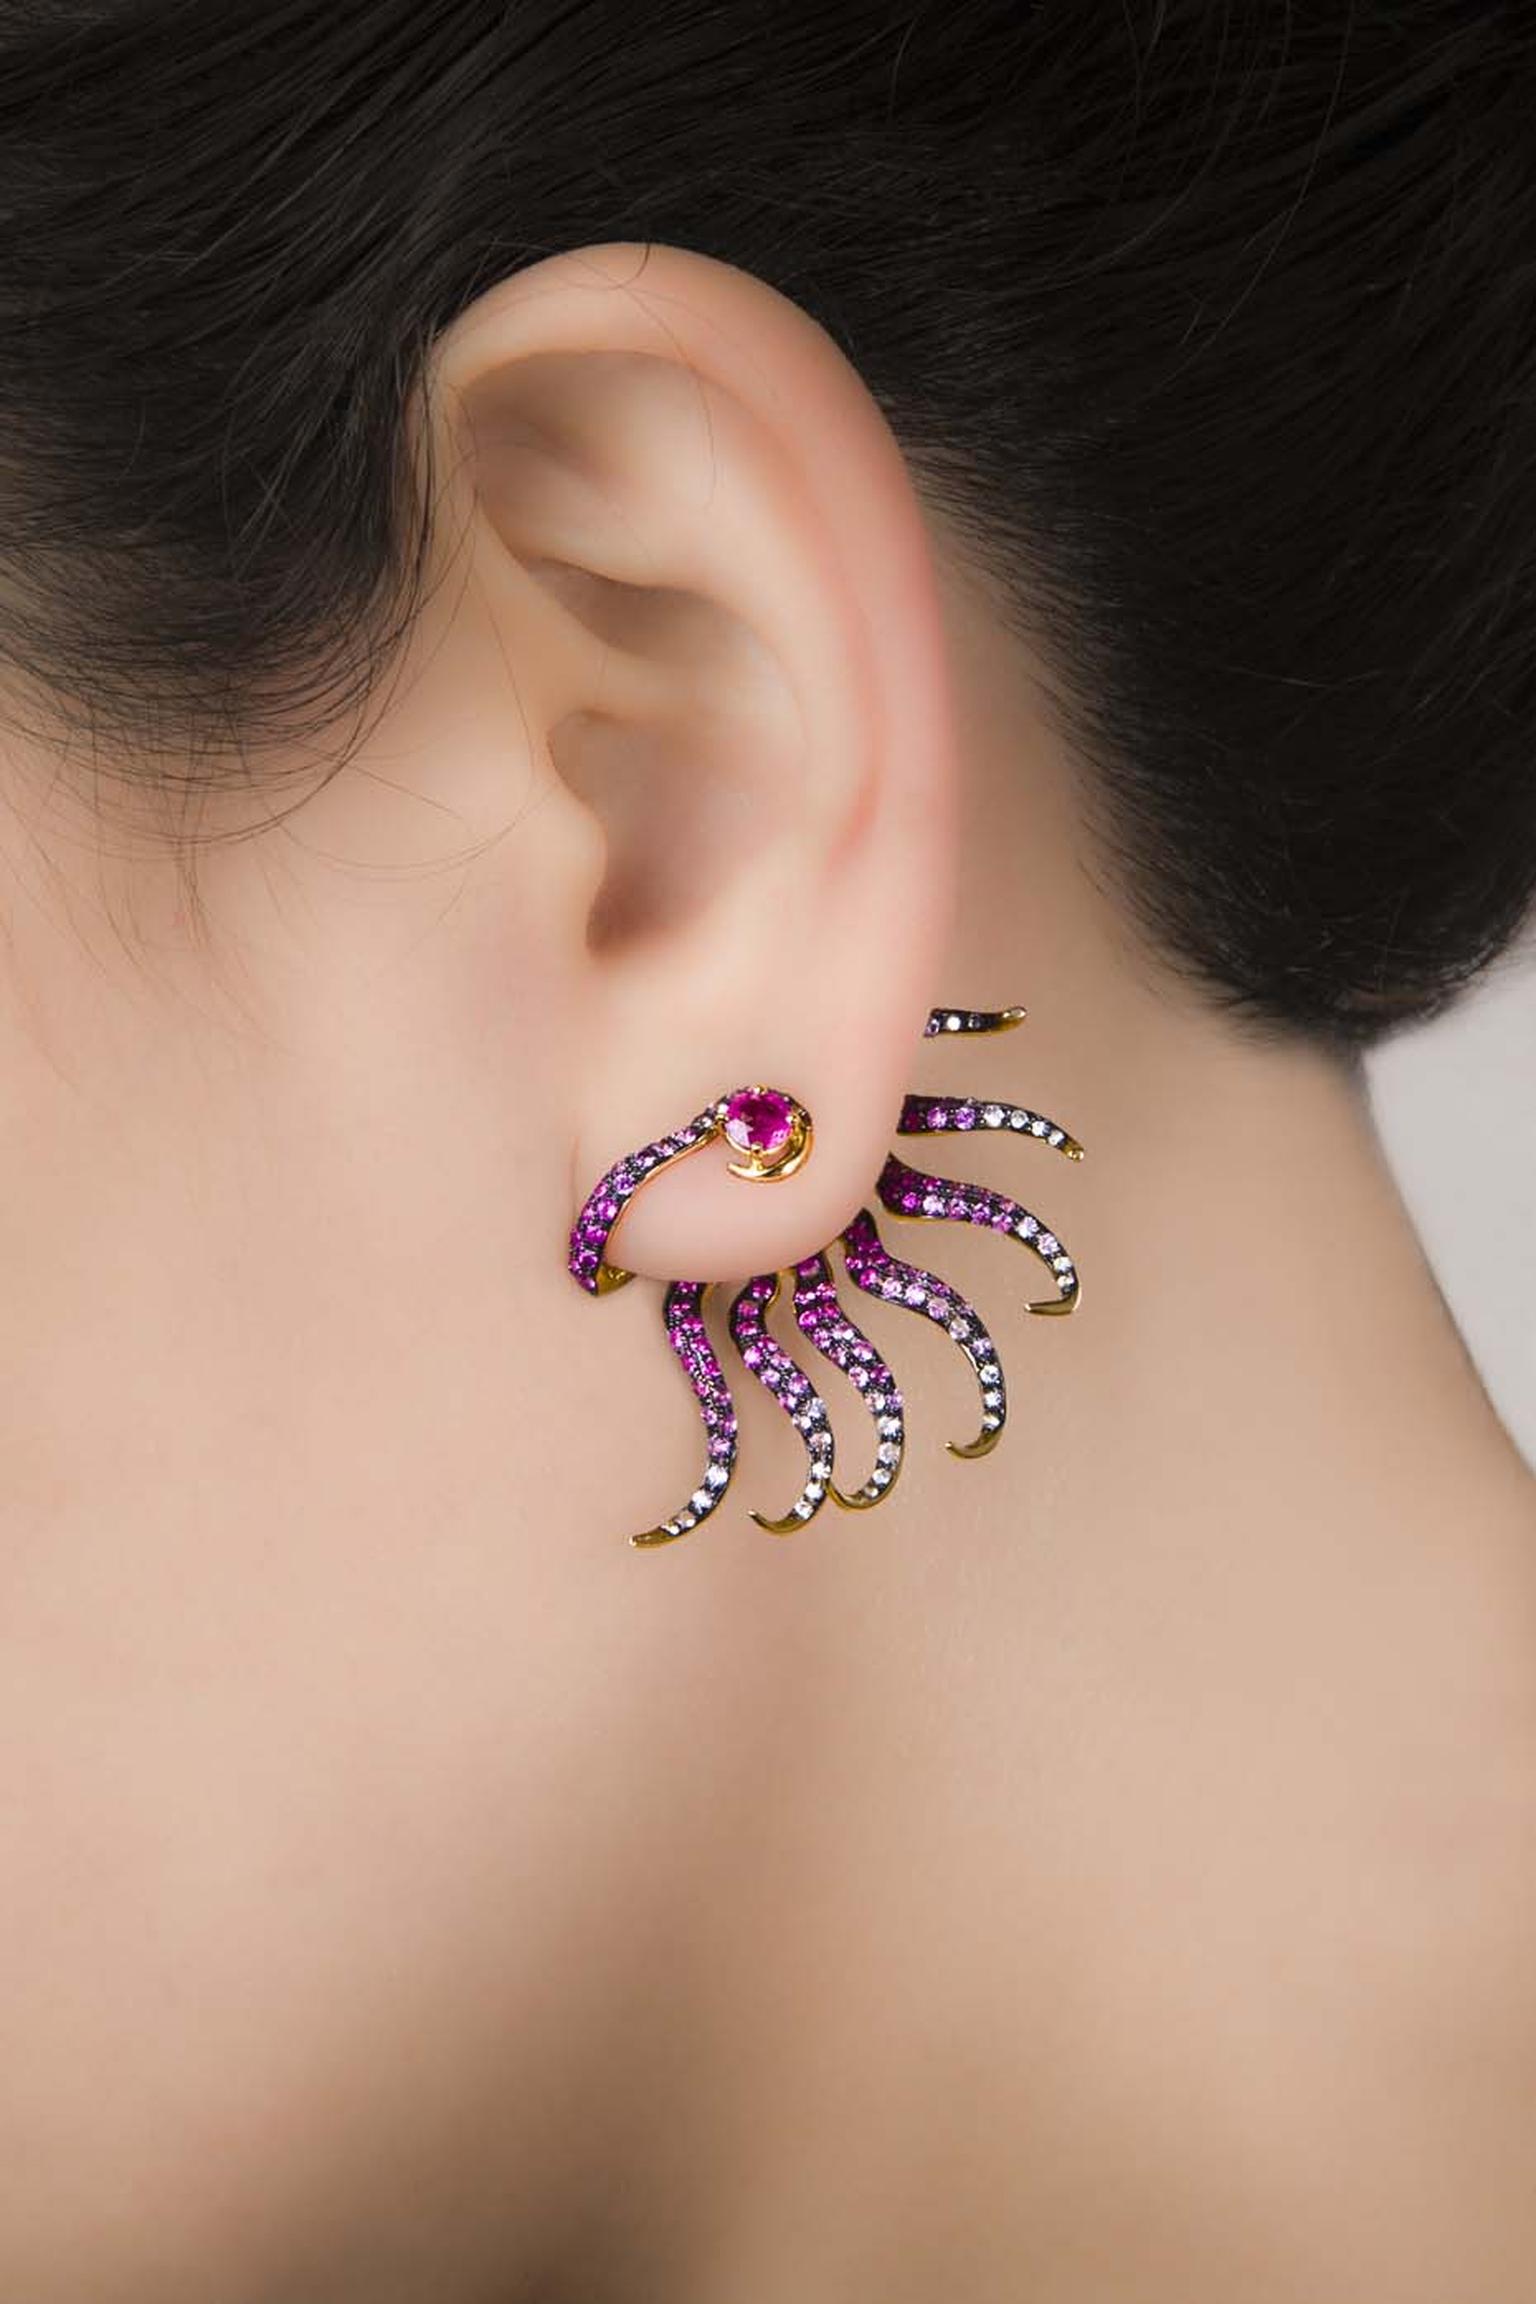 Leyla Abdollahi's Nymph of a Rose Draped Spring earrings